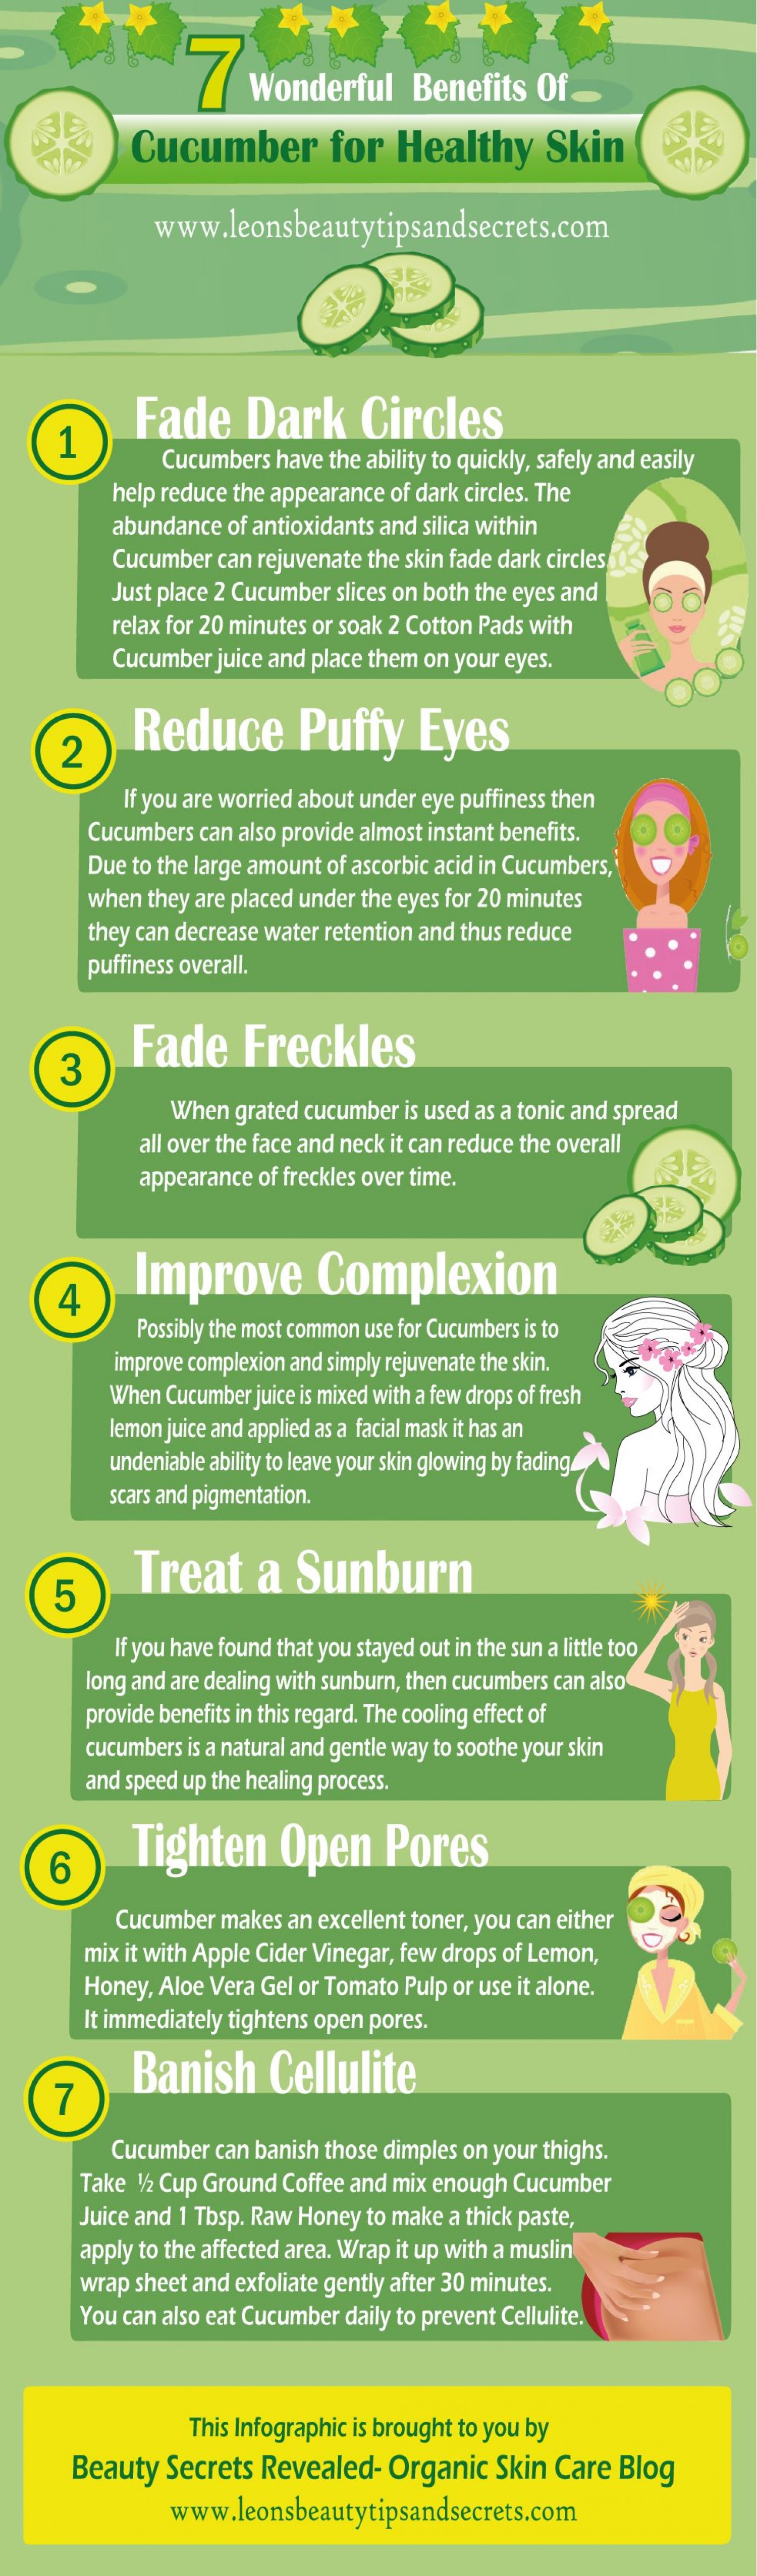 7-wonderful-benefits-of-cucumber-for-healthy-skin_521202ead757e_w1500